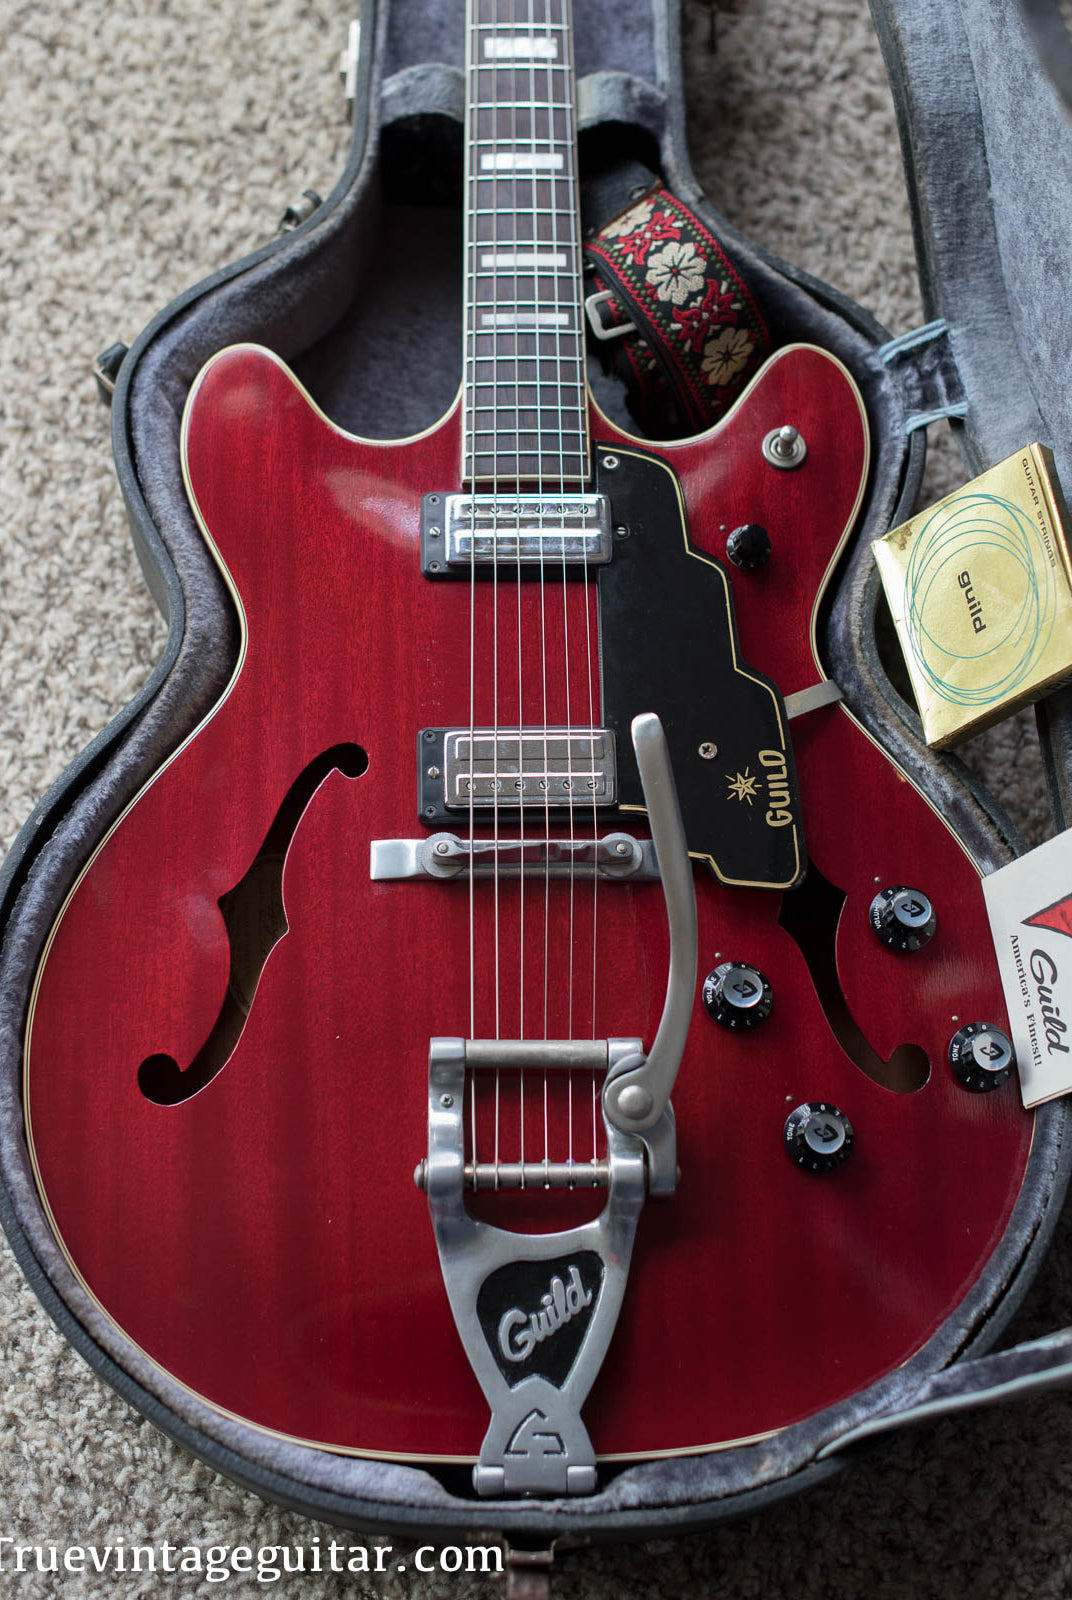 1967 Guild Starfire V Cherry red guitar